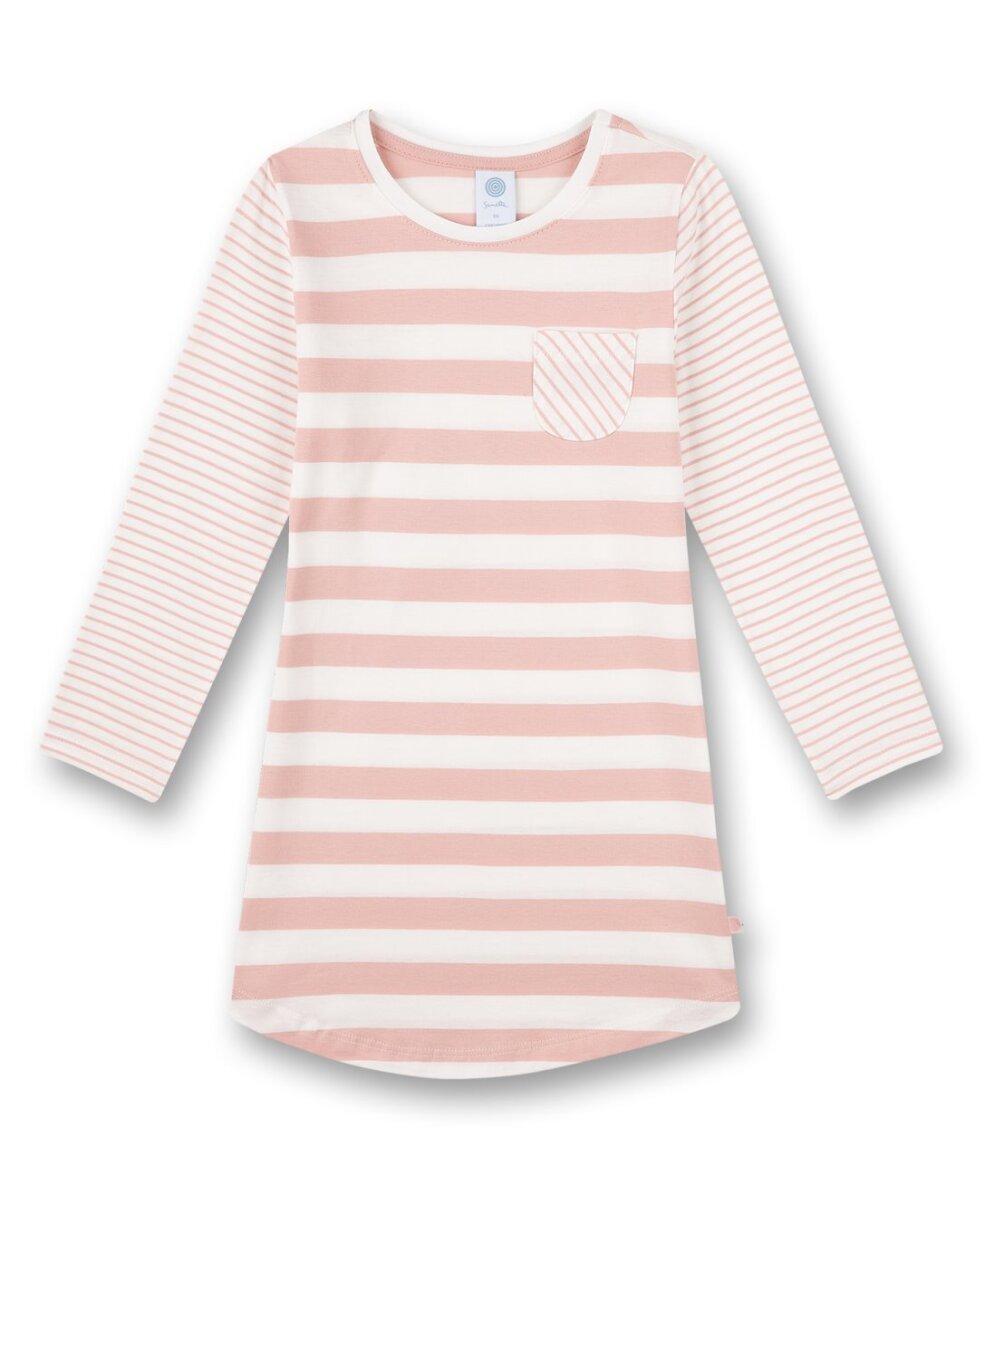 Sleepshirt stripes